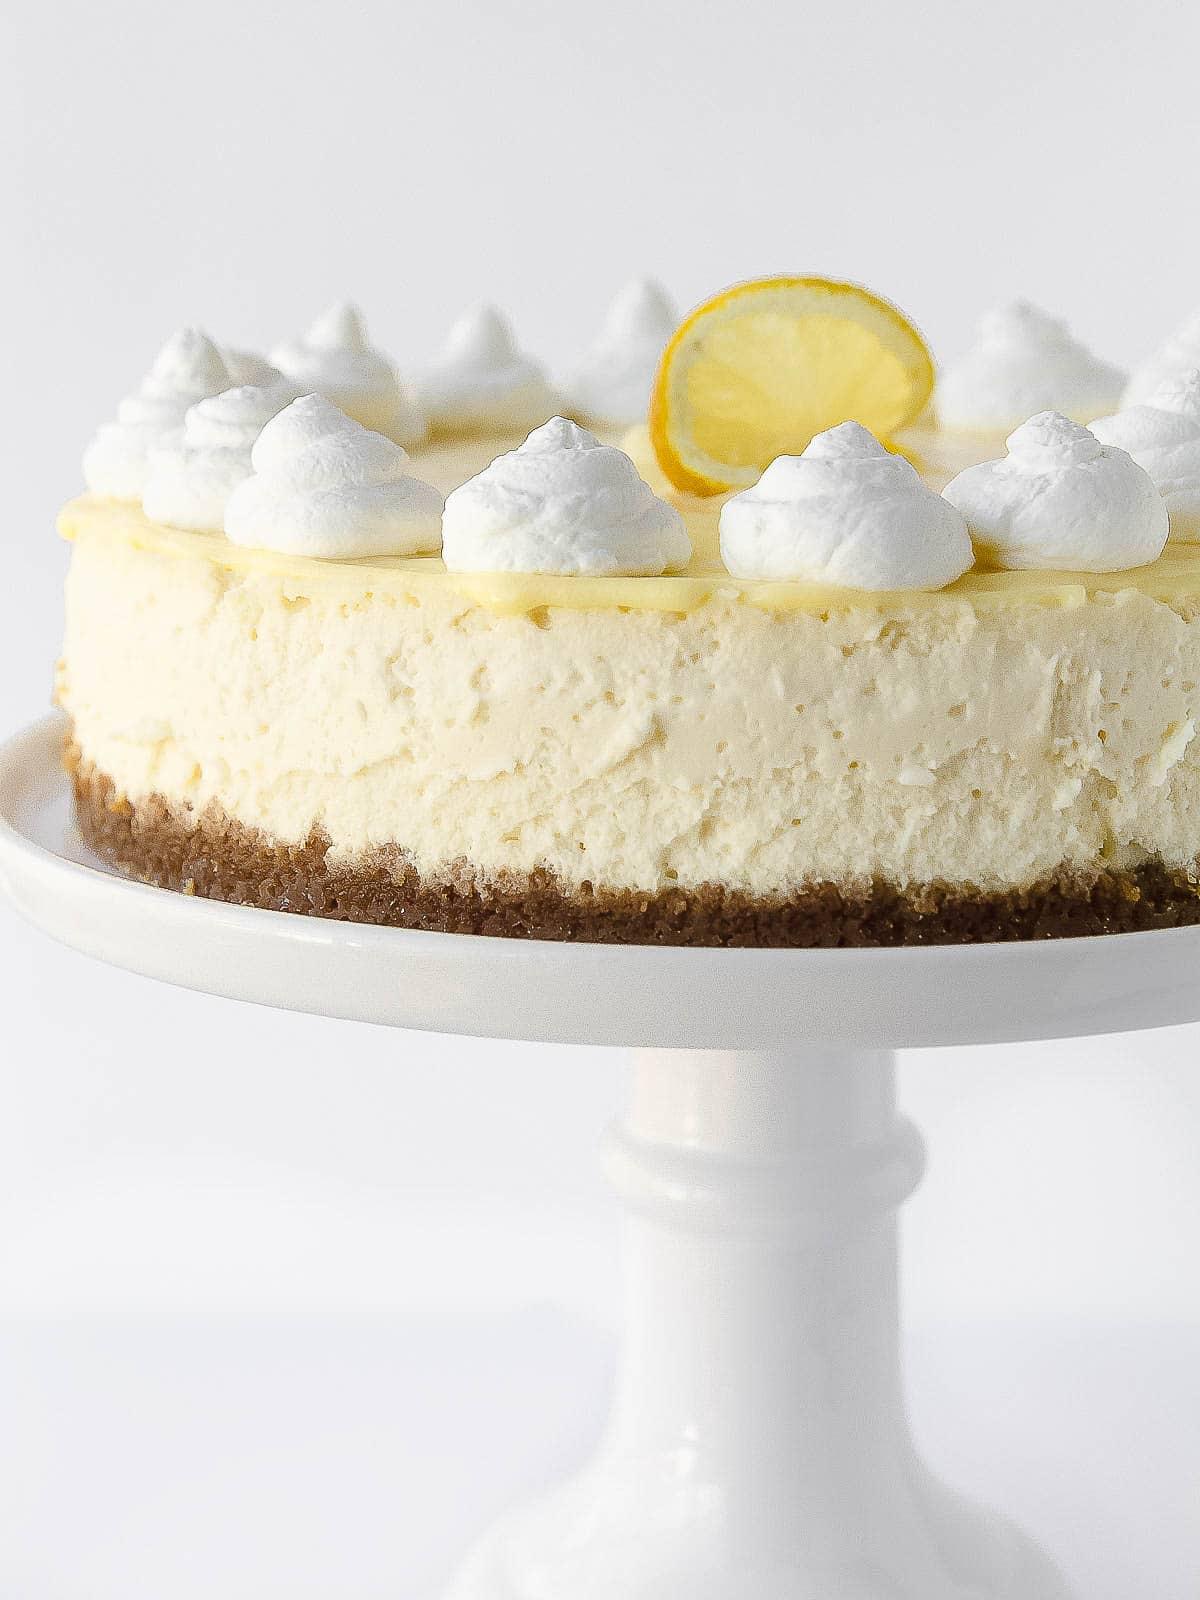 Lemon cheesecake on a cake stand.